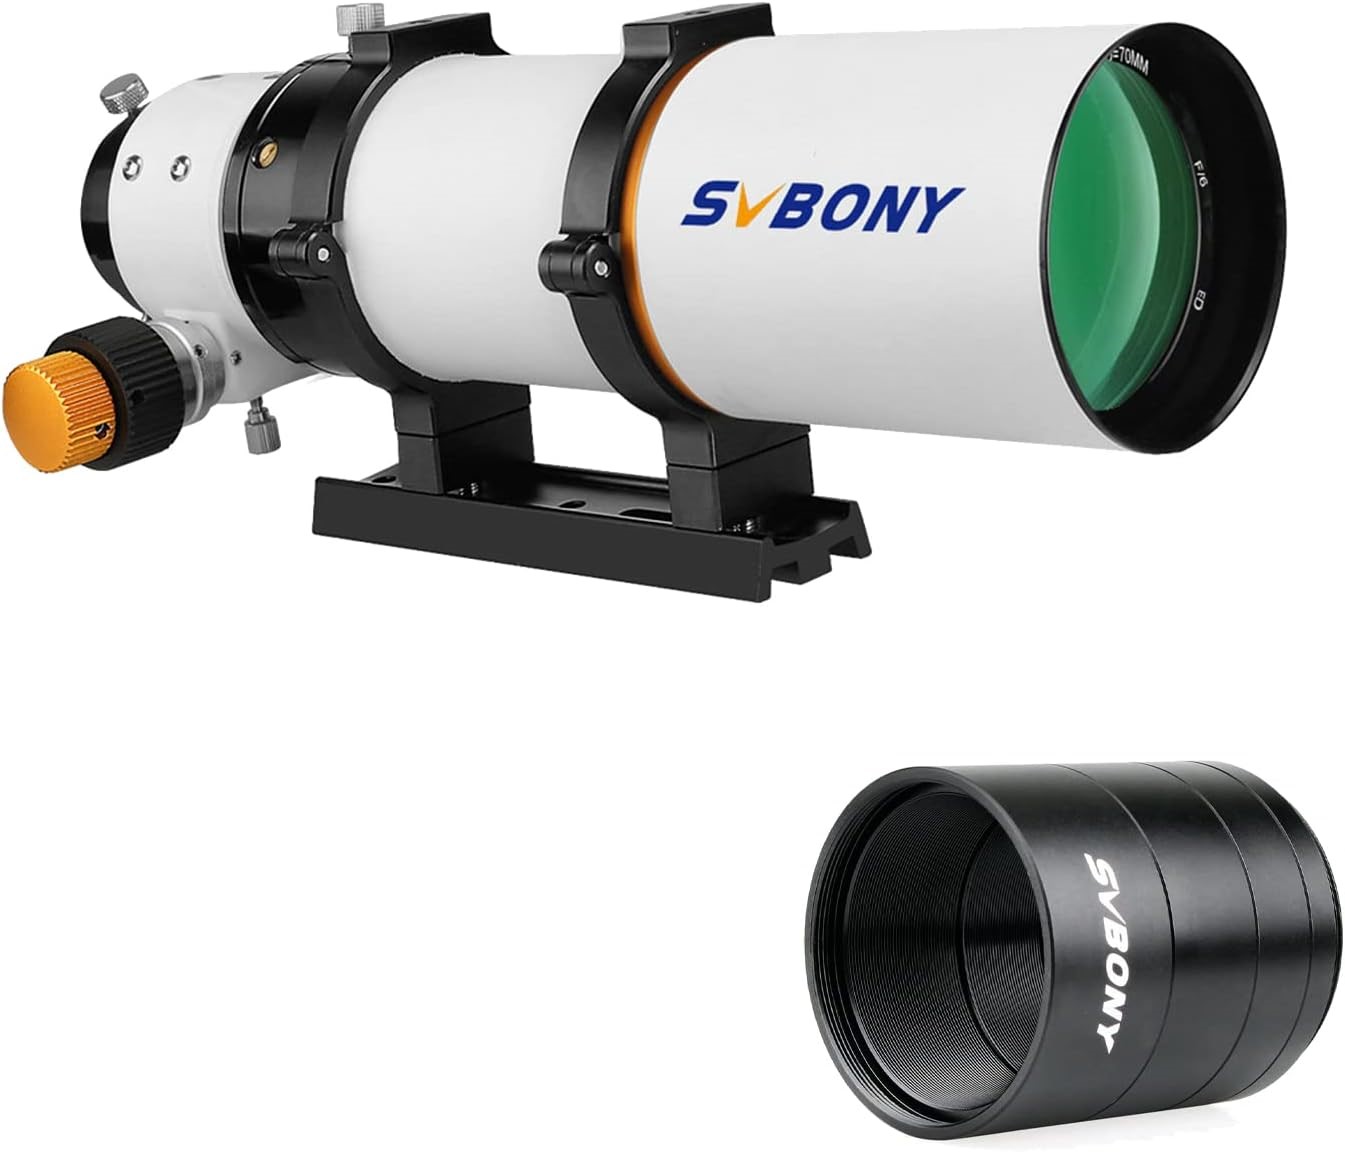 SVBNOY SV503 Telescope | DeviceDaily.com